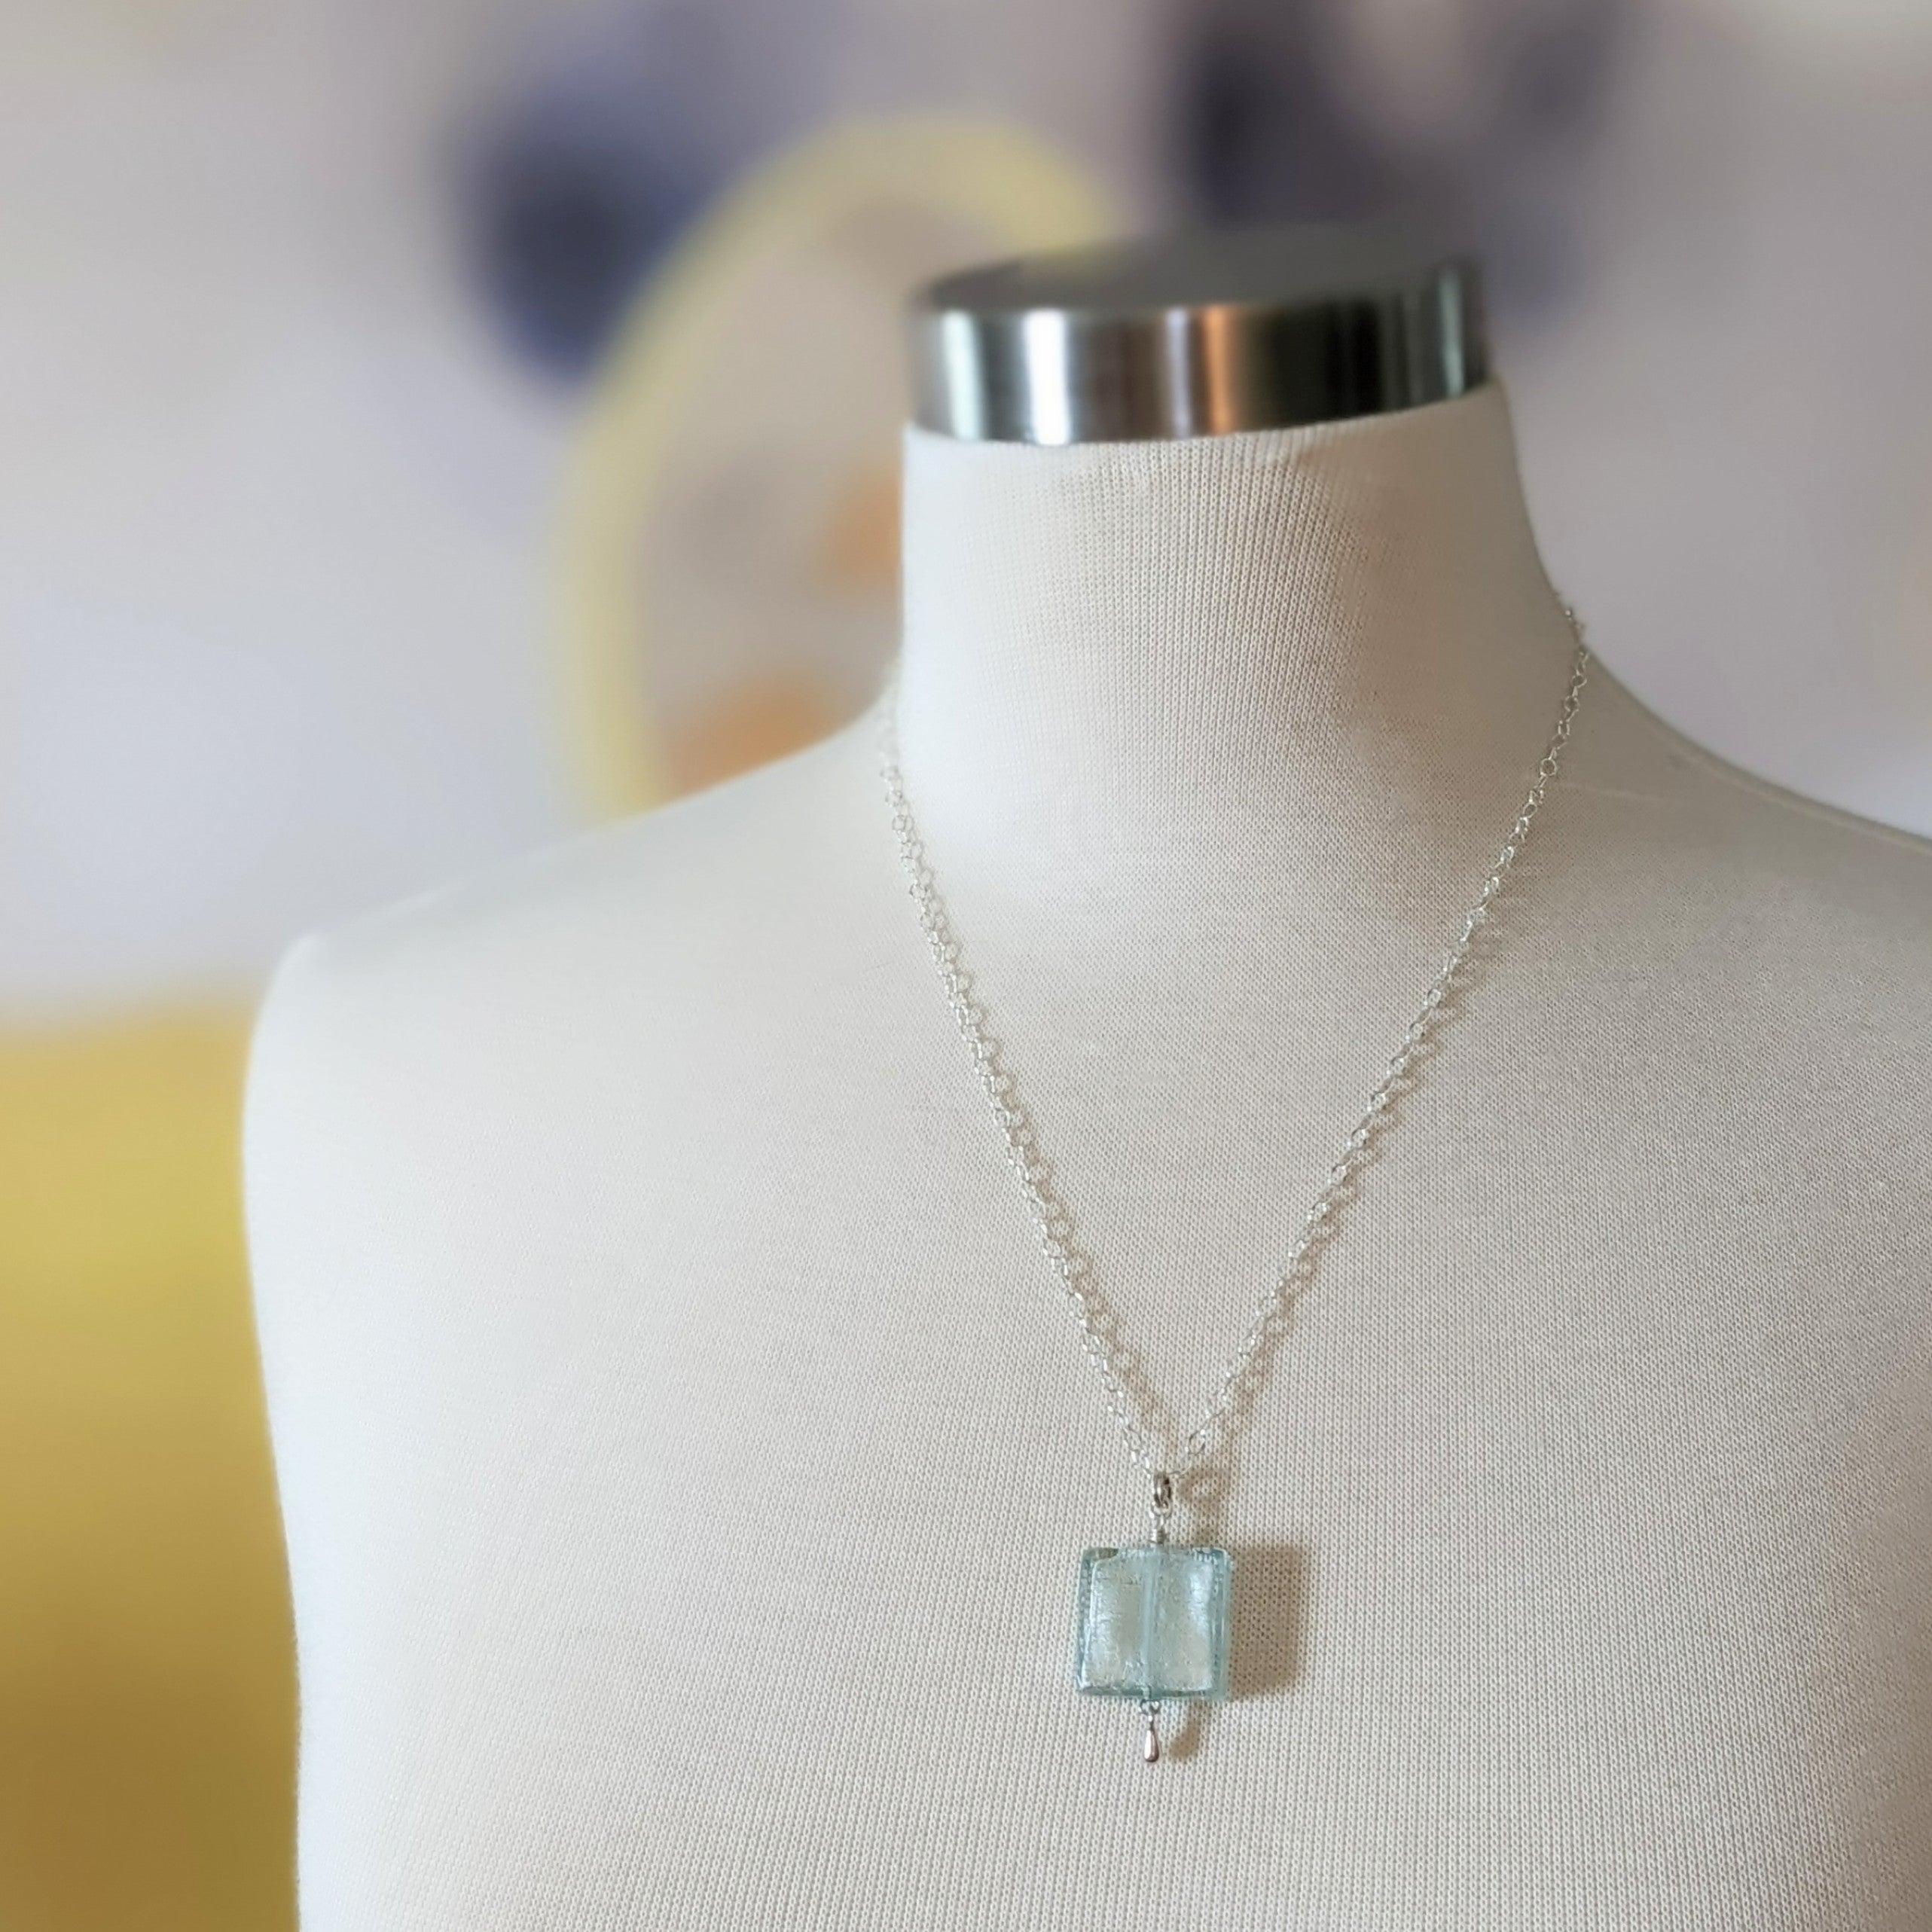 Aquamarine blue Murano glass pendant necklace, March Birthstone